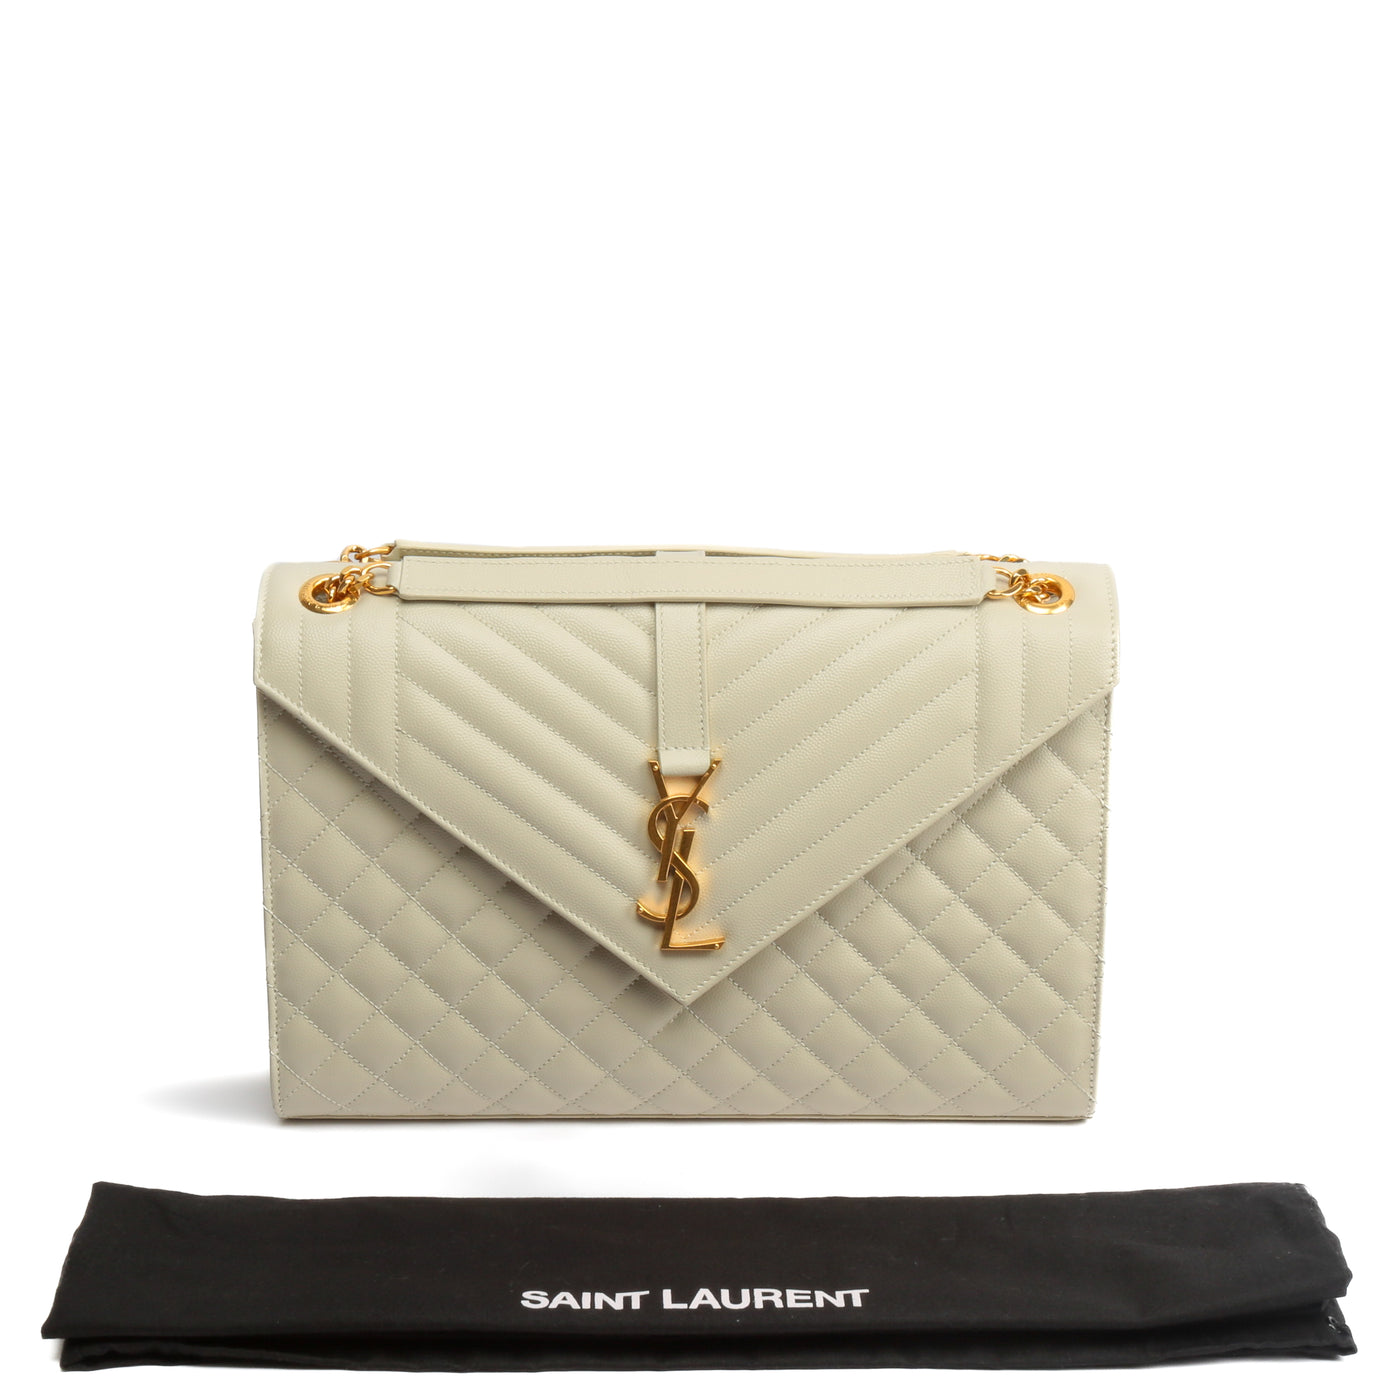 SAINT LAURENT Large Envelope Flap Bag - Ivory